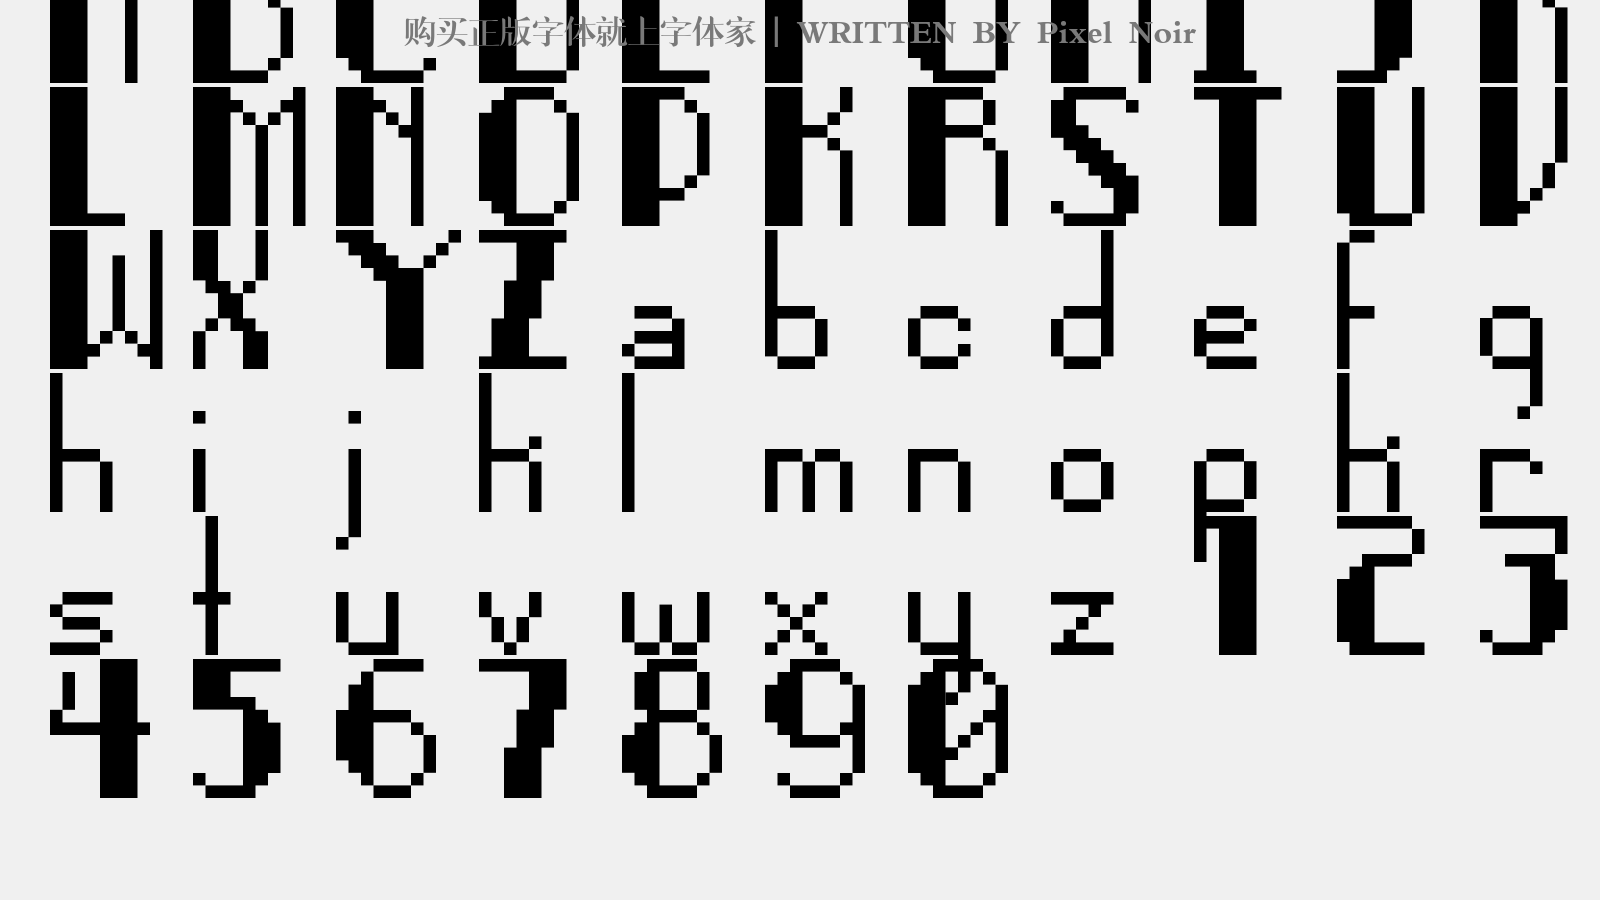 Pixel Noir - 大写字母/小写字母/数字